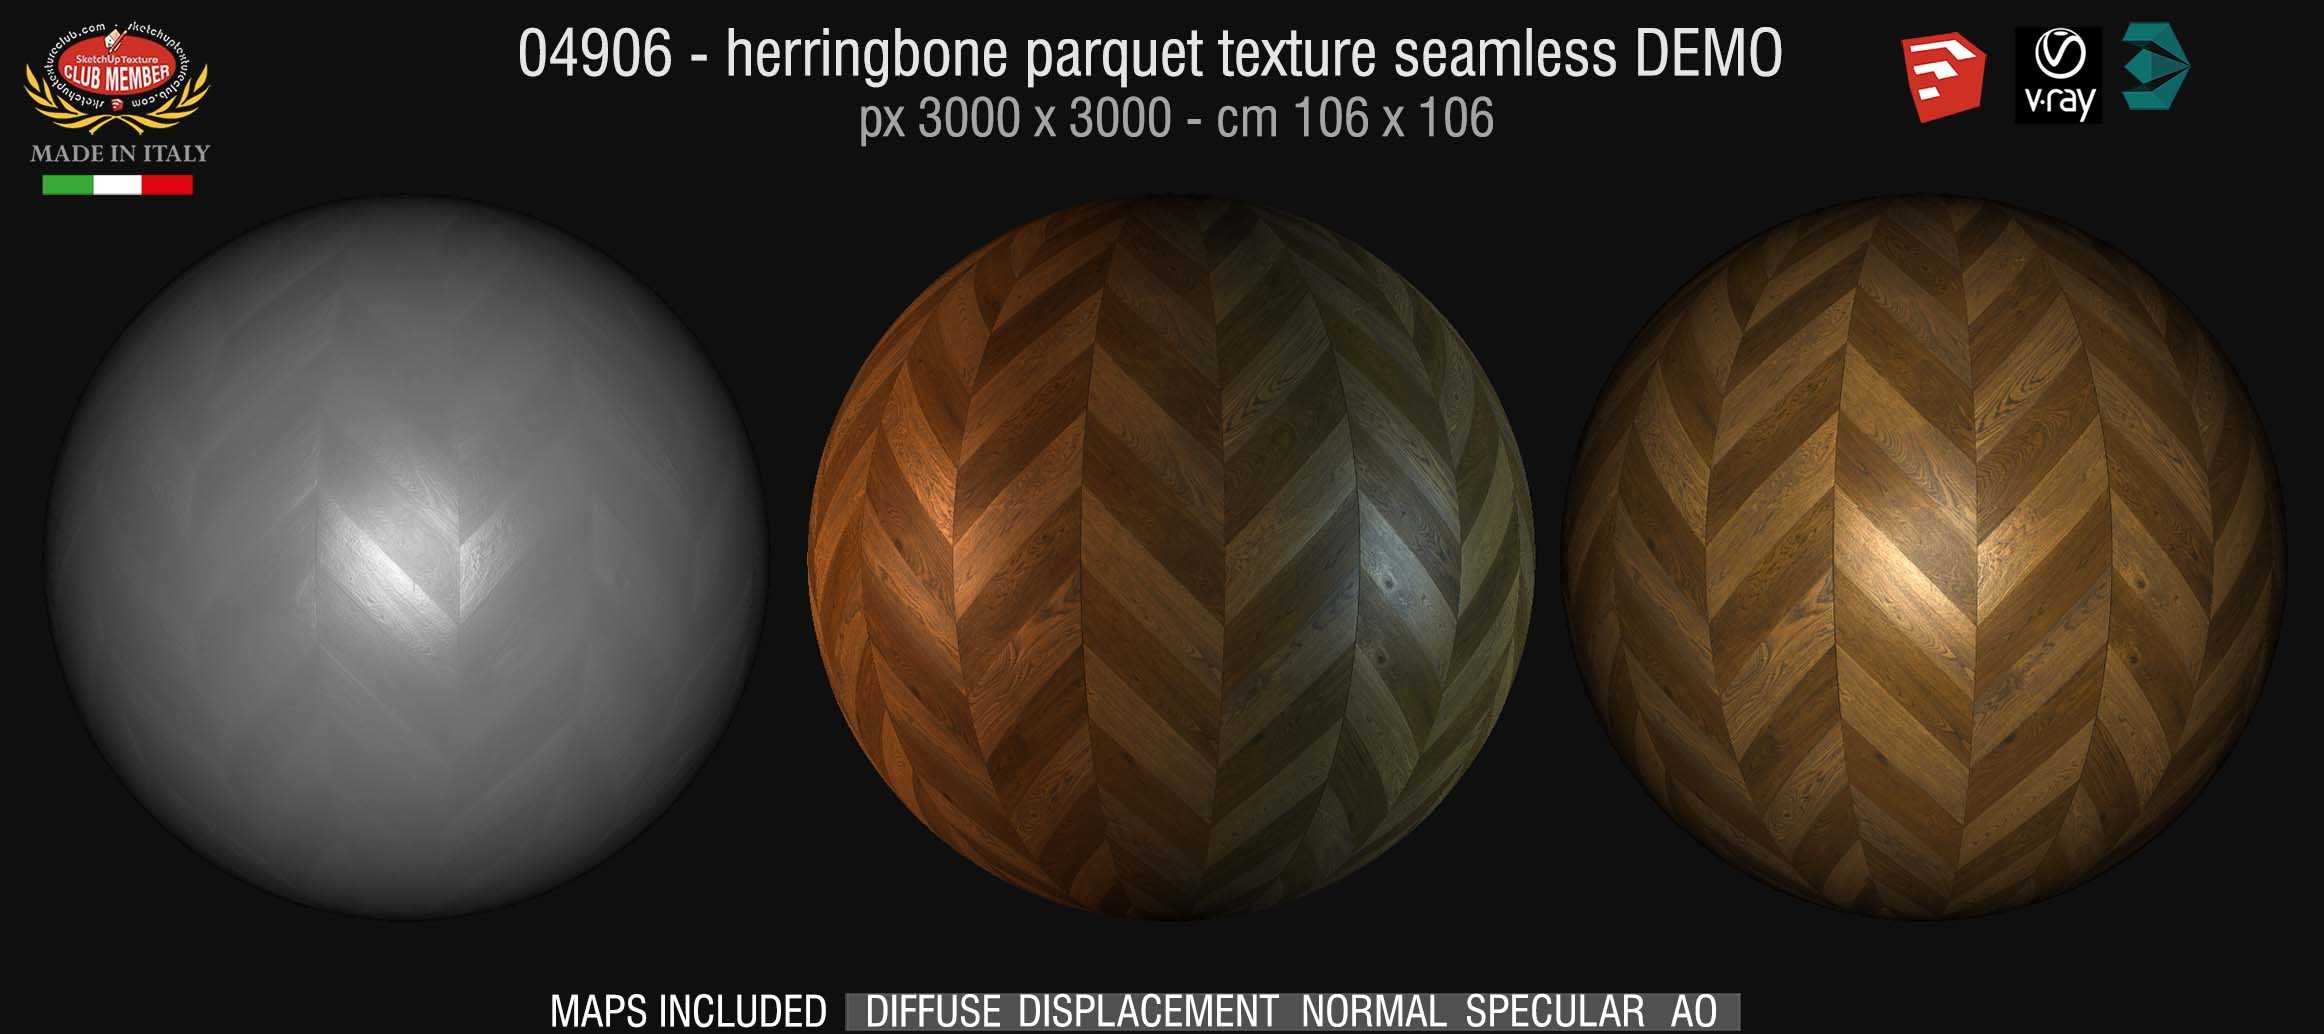 04906 HR Herringbone parquet texture seamless + maps DEMO